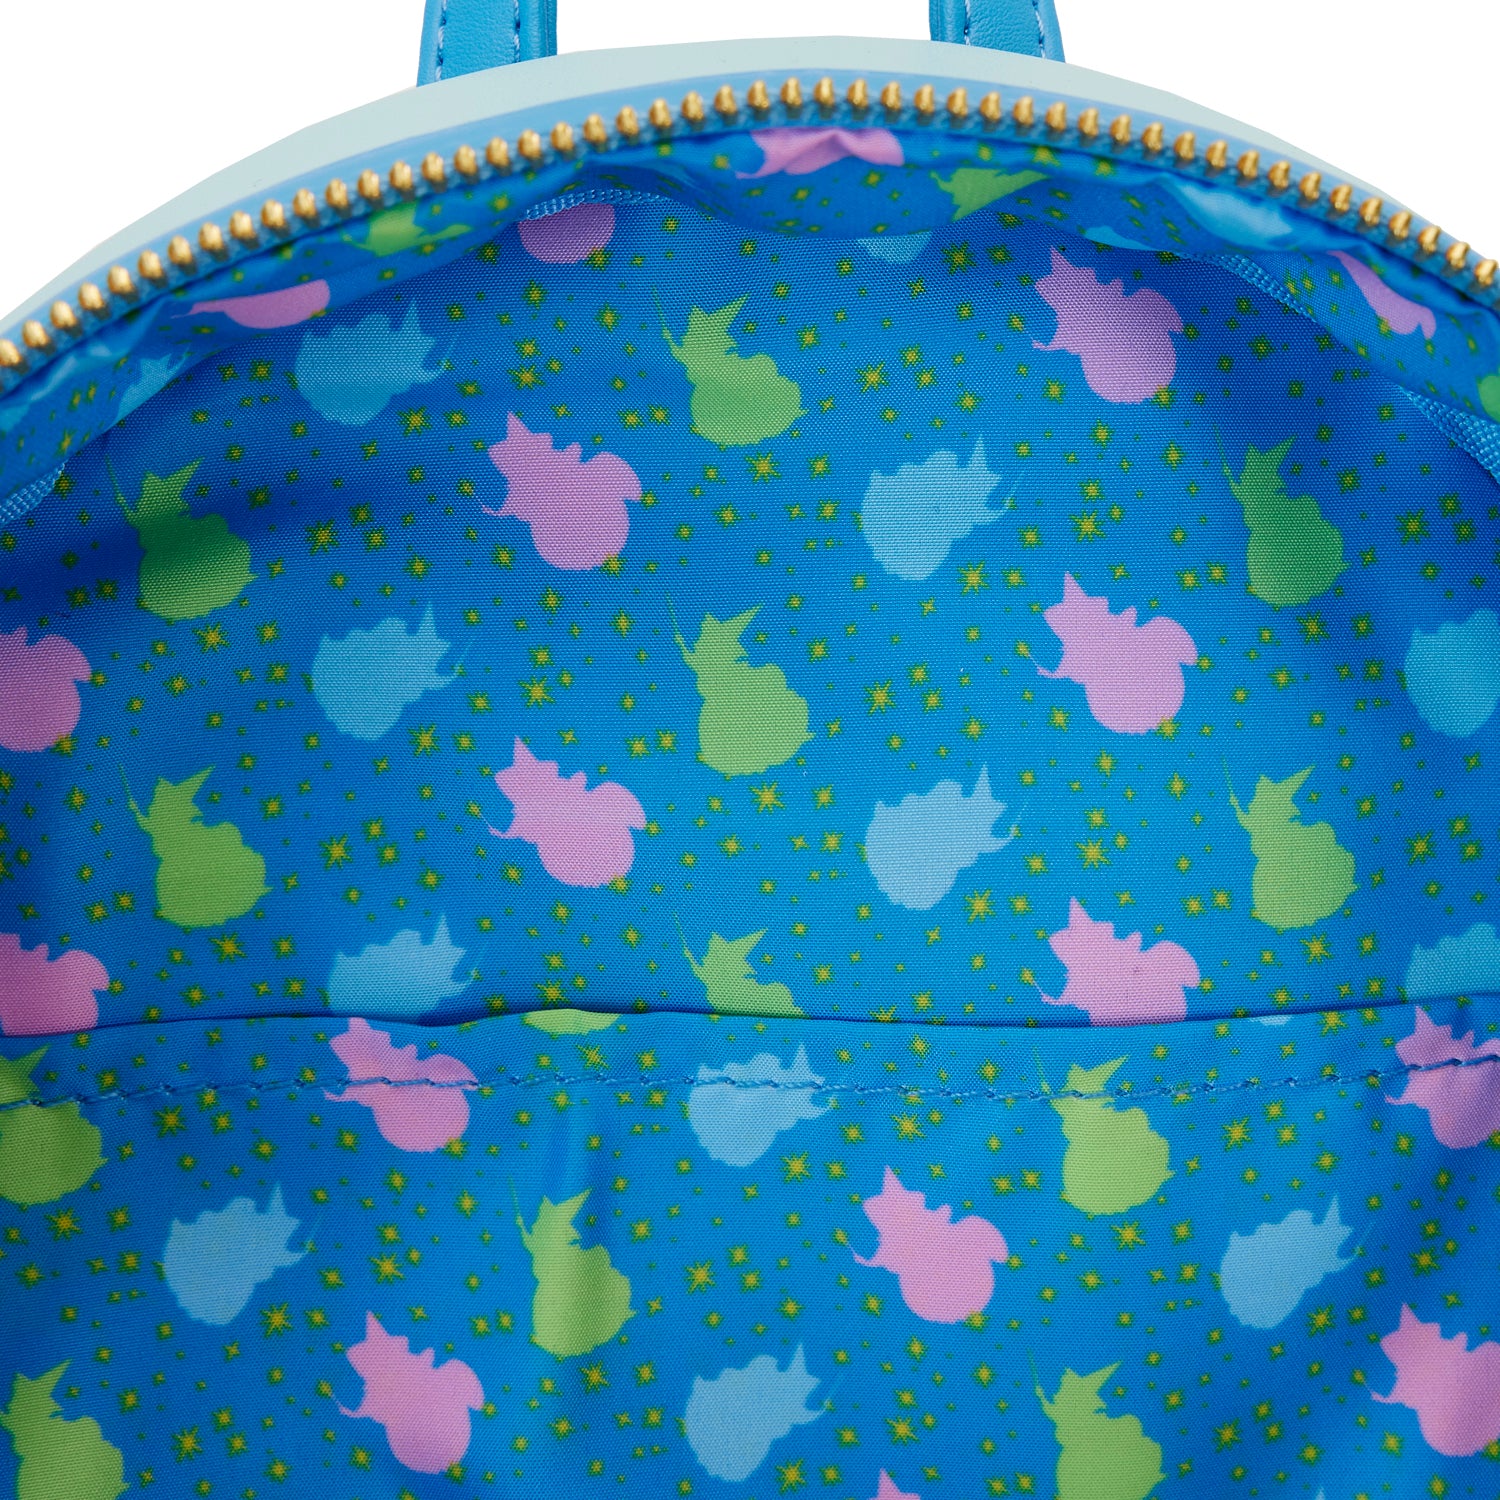 Loungefly, Bags, Loungefly Sleeping Beauty Mini Backpack Cardholder